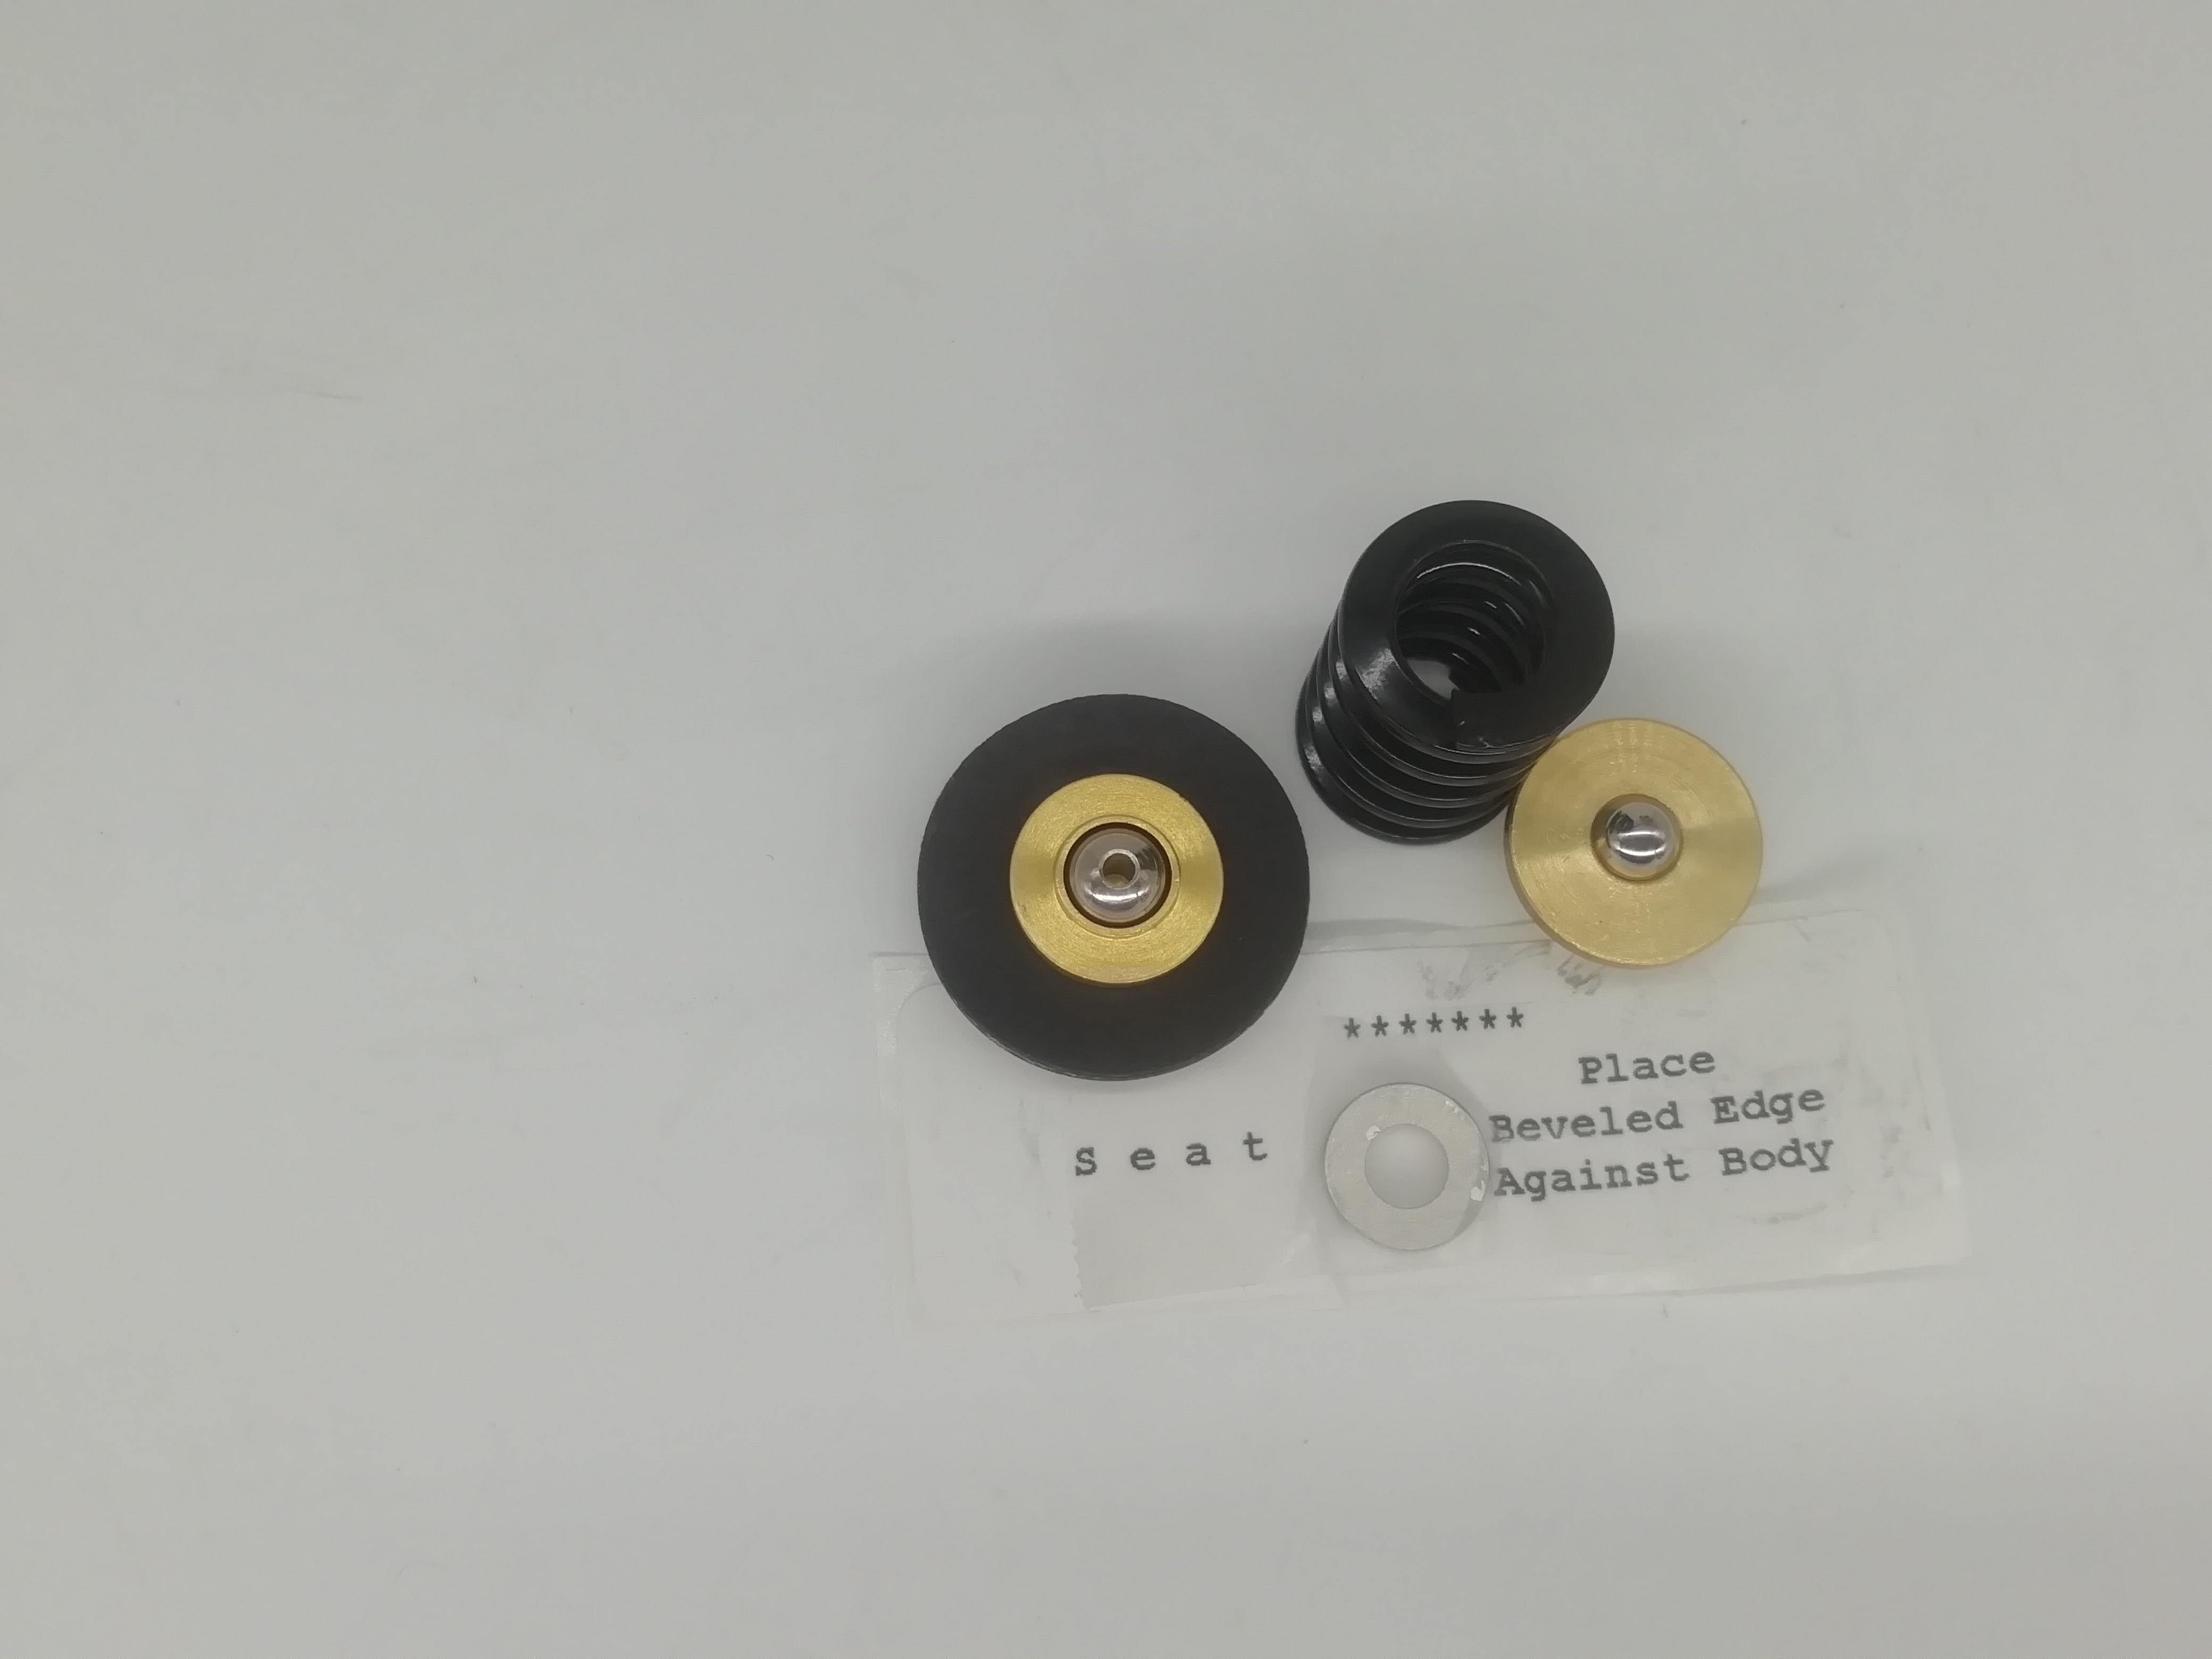 Ingersoll Rand Spare Parts Pressure regulating valve maintenance 250019-453